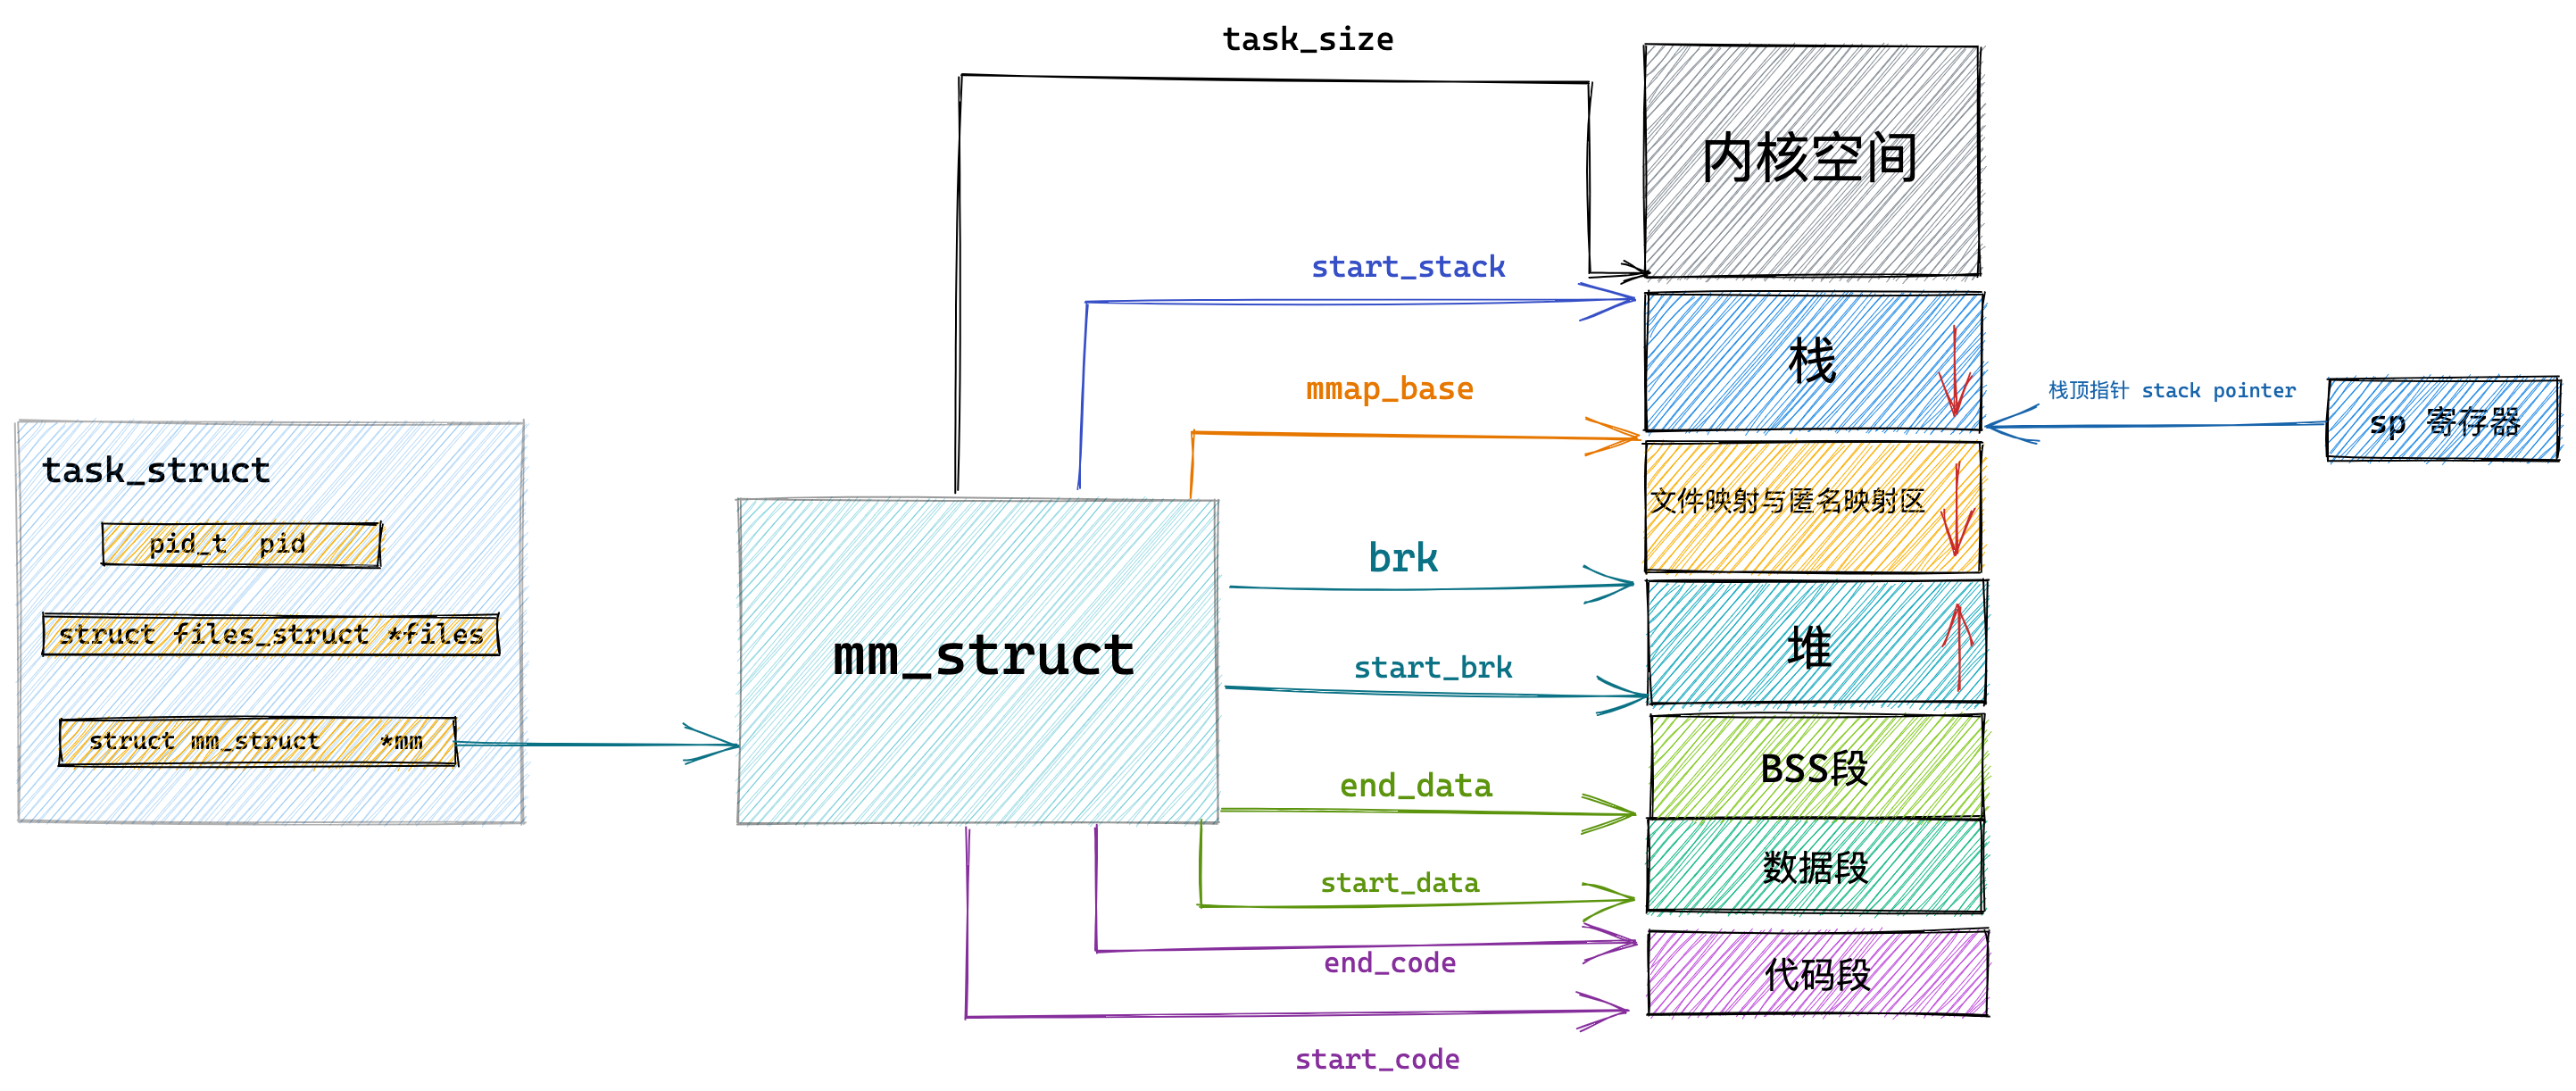 task_struct